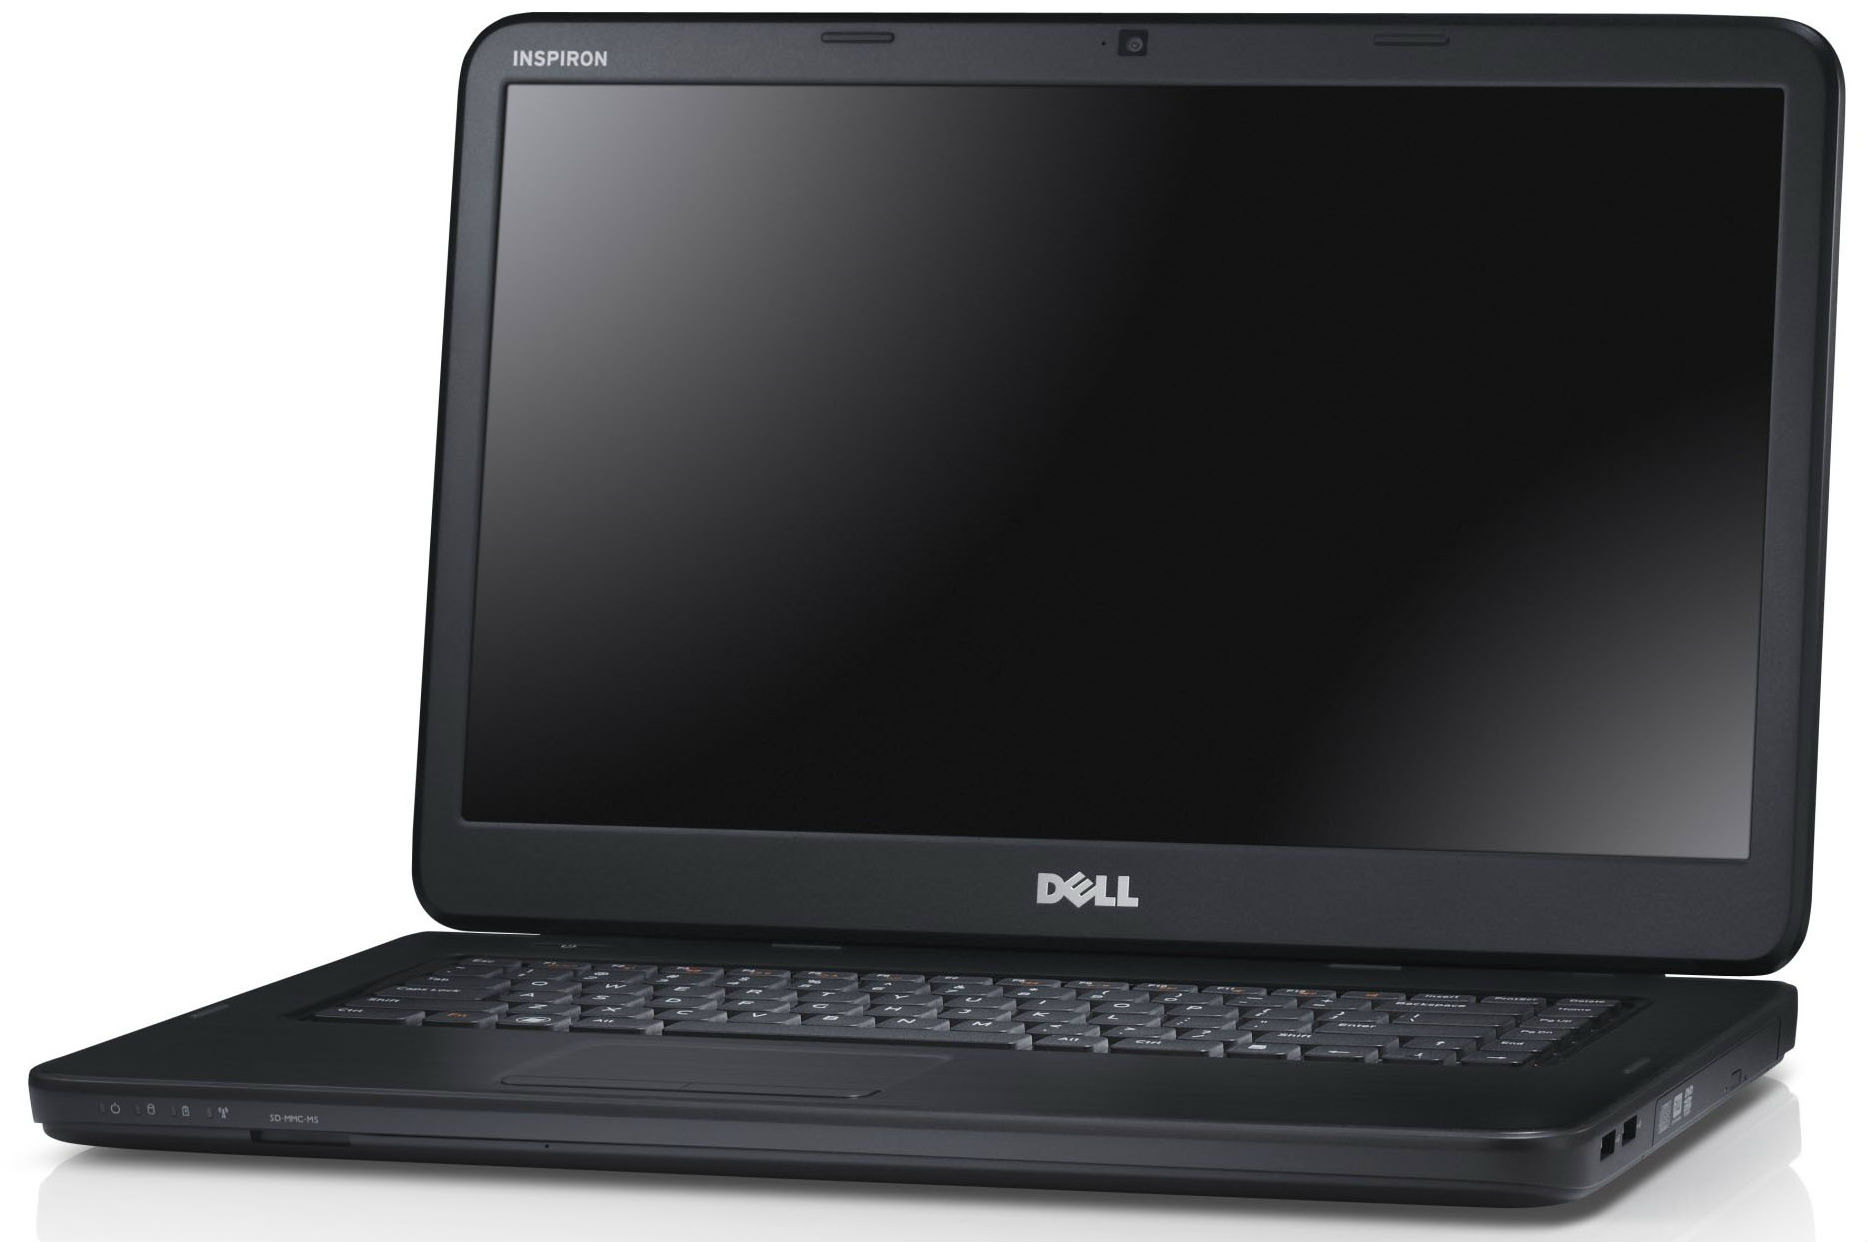 Dell Inspiron 15 Laptop (Core i3 2nd Gen/2 GB/500 GB/Windows 8) Price